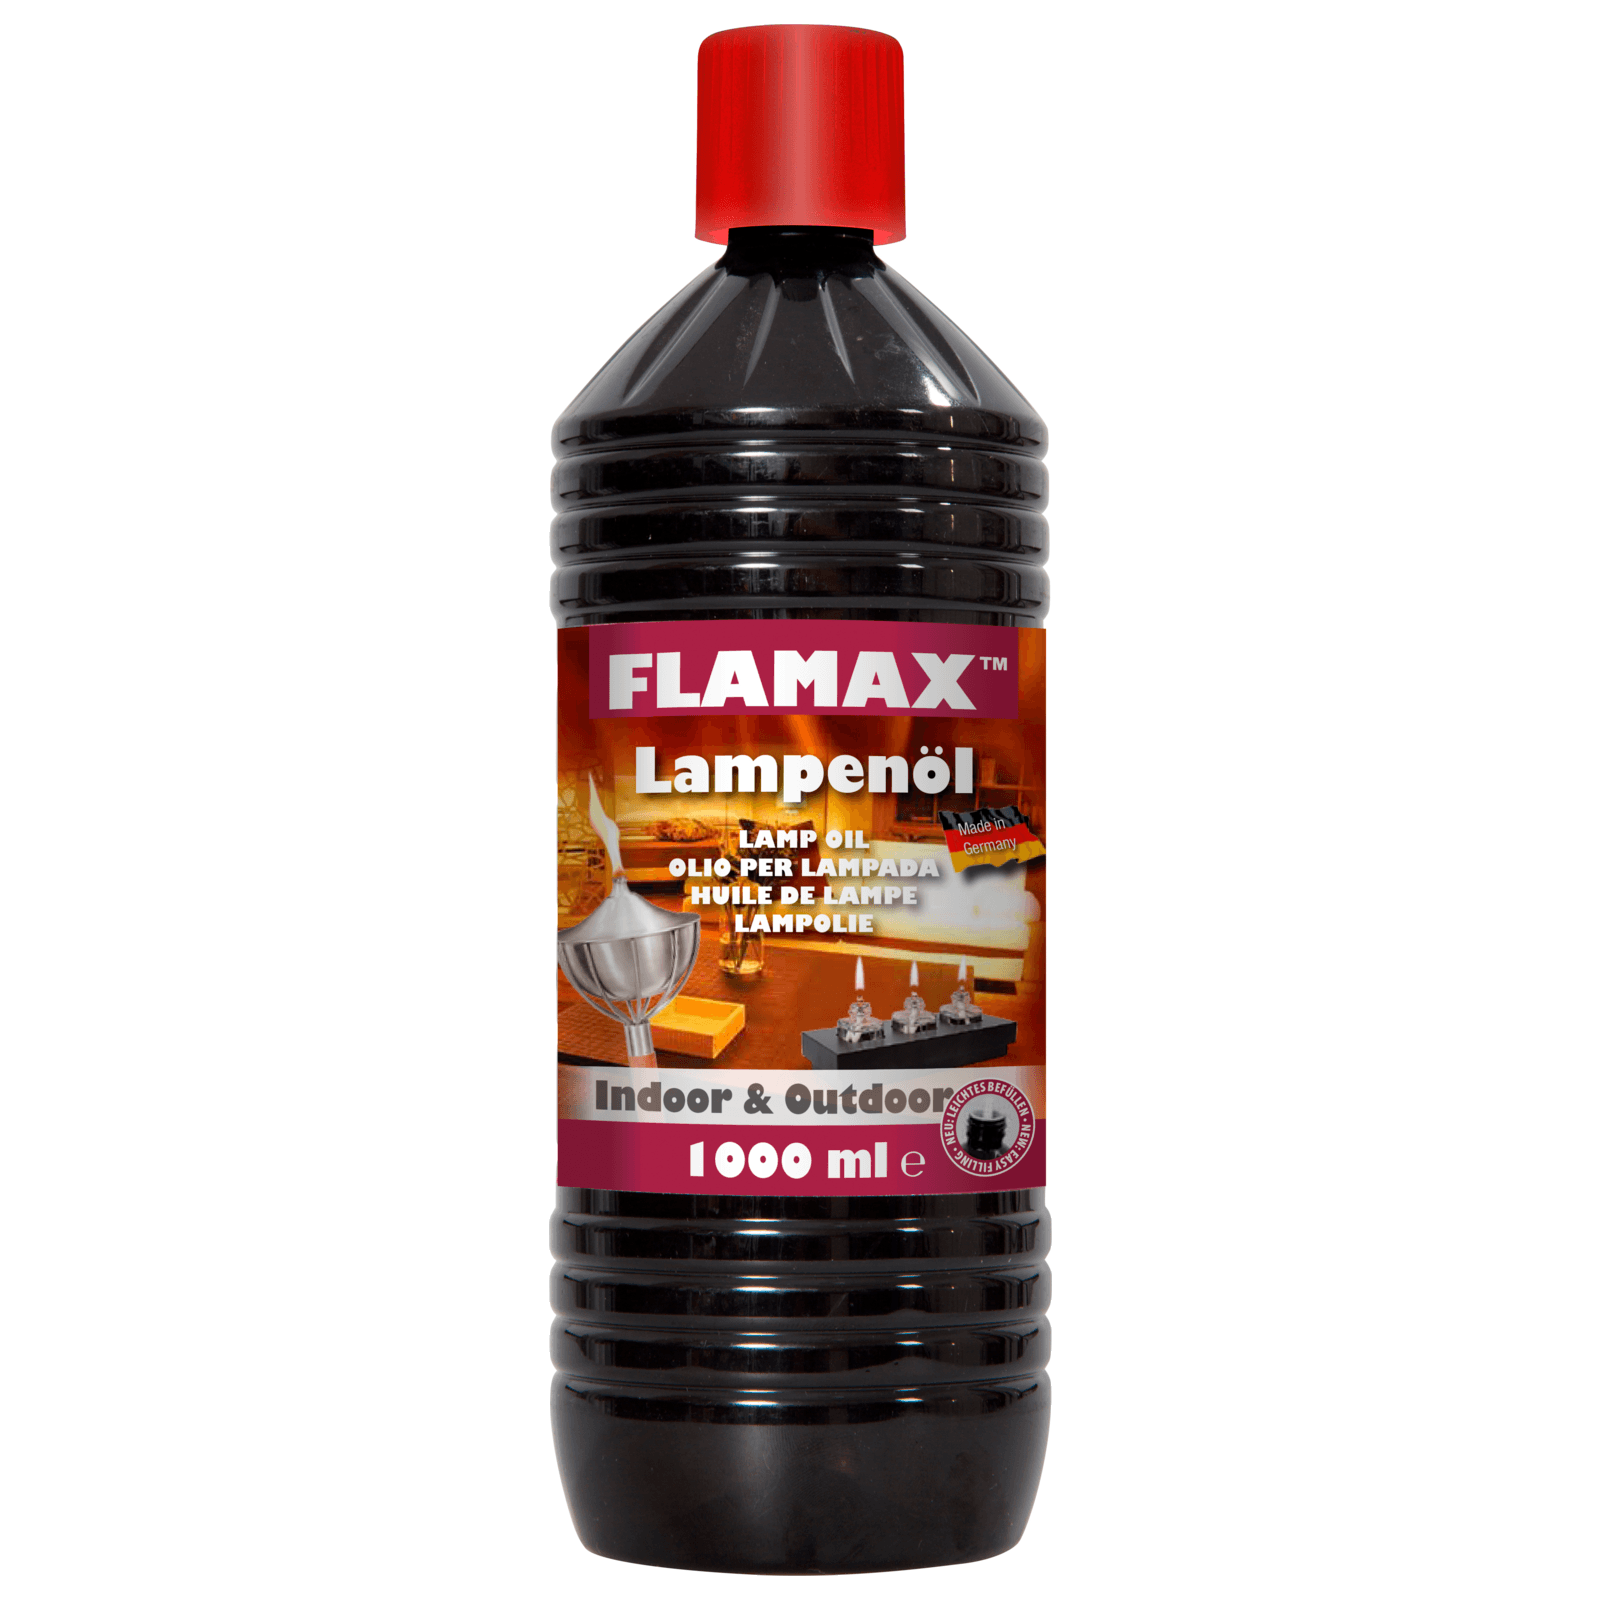 Flamax Lampenöl 1l  für 3.59 EUR